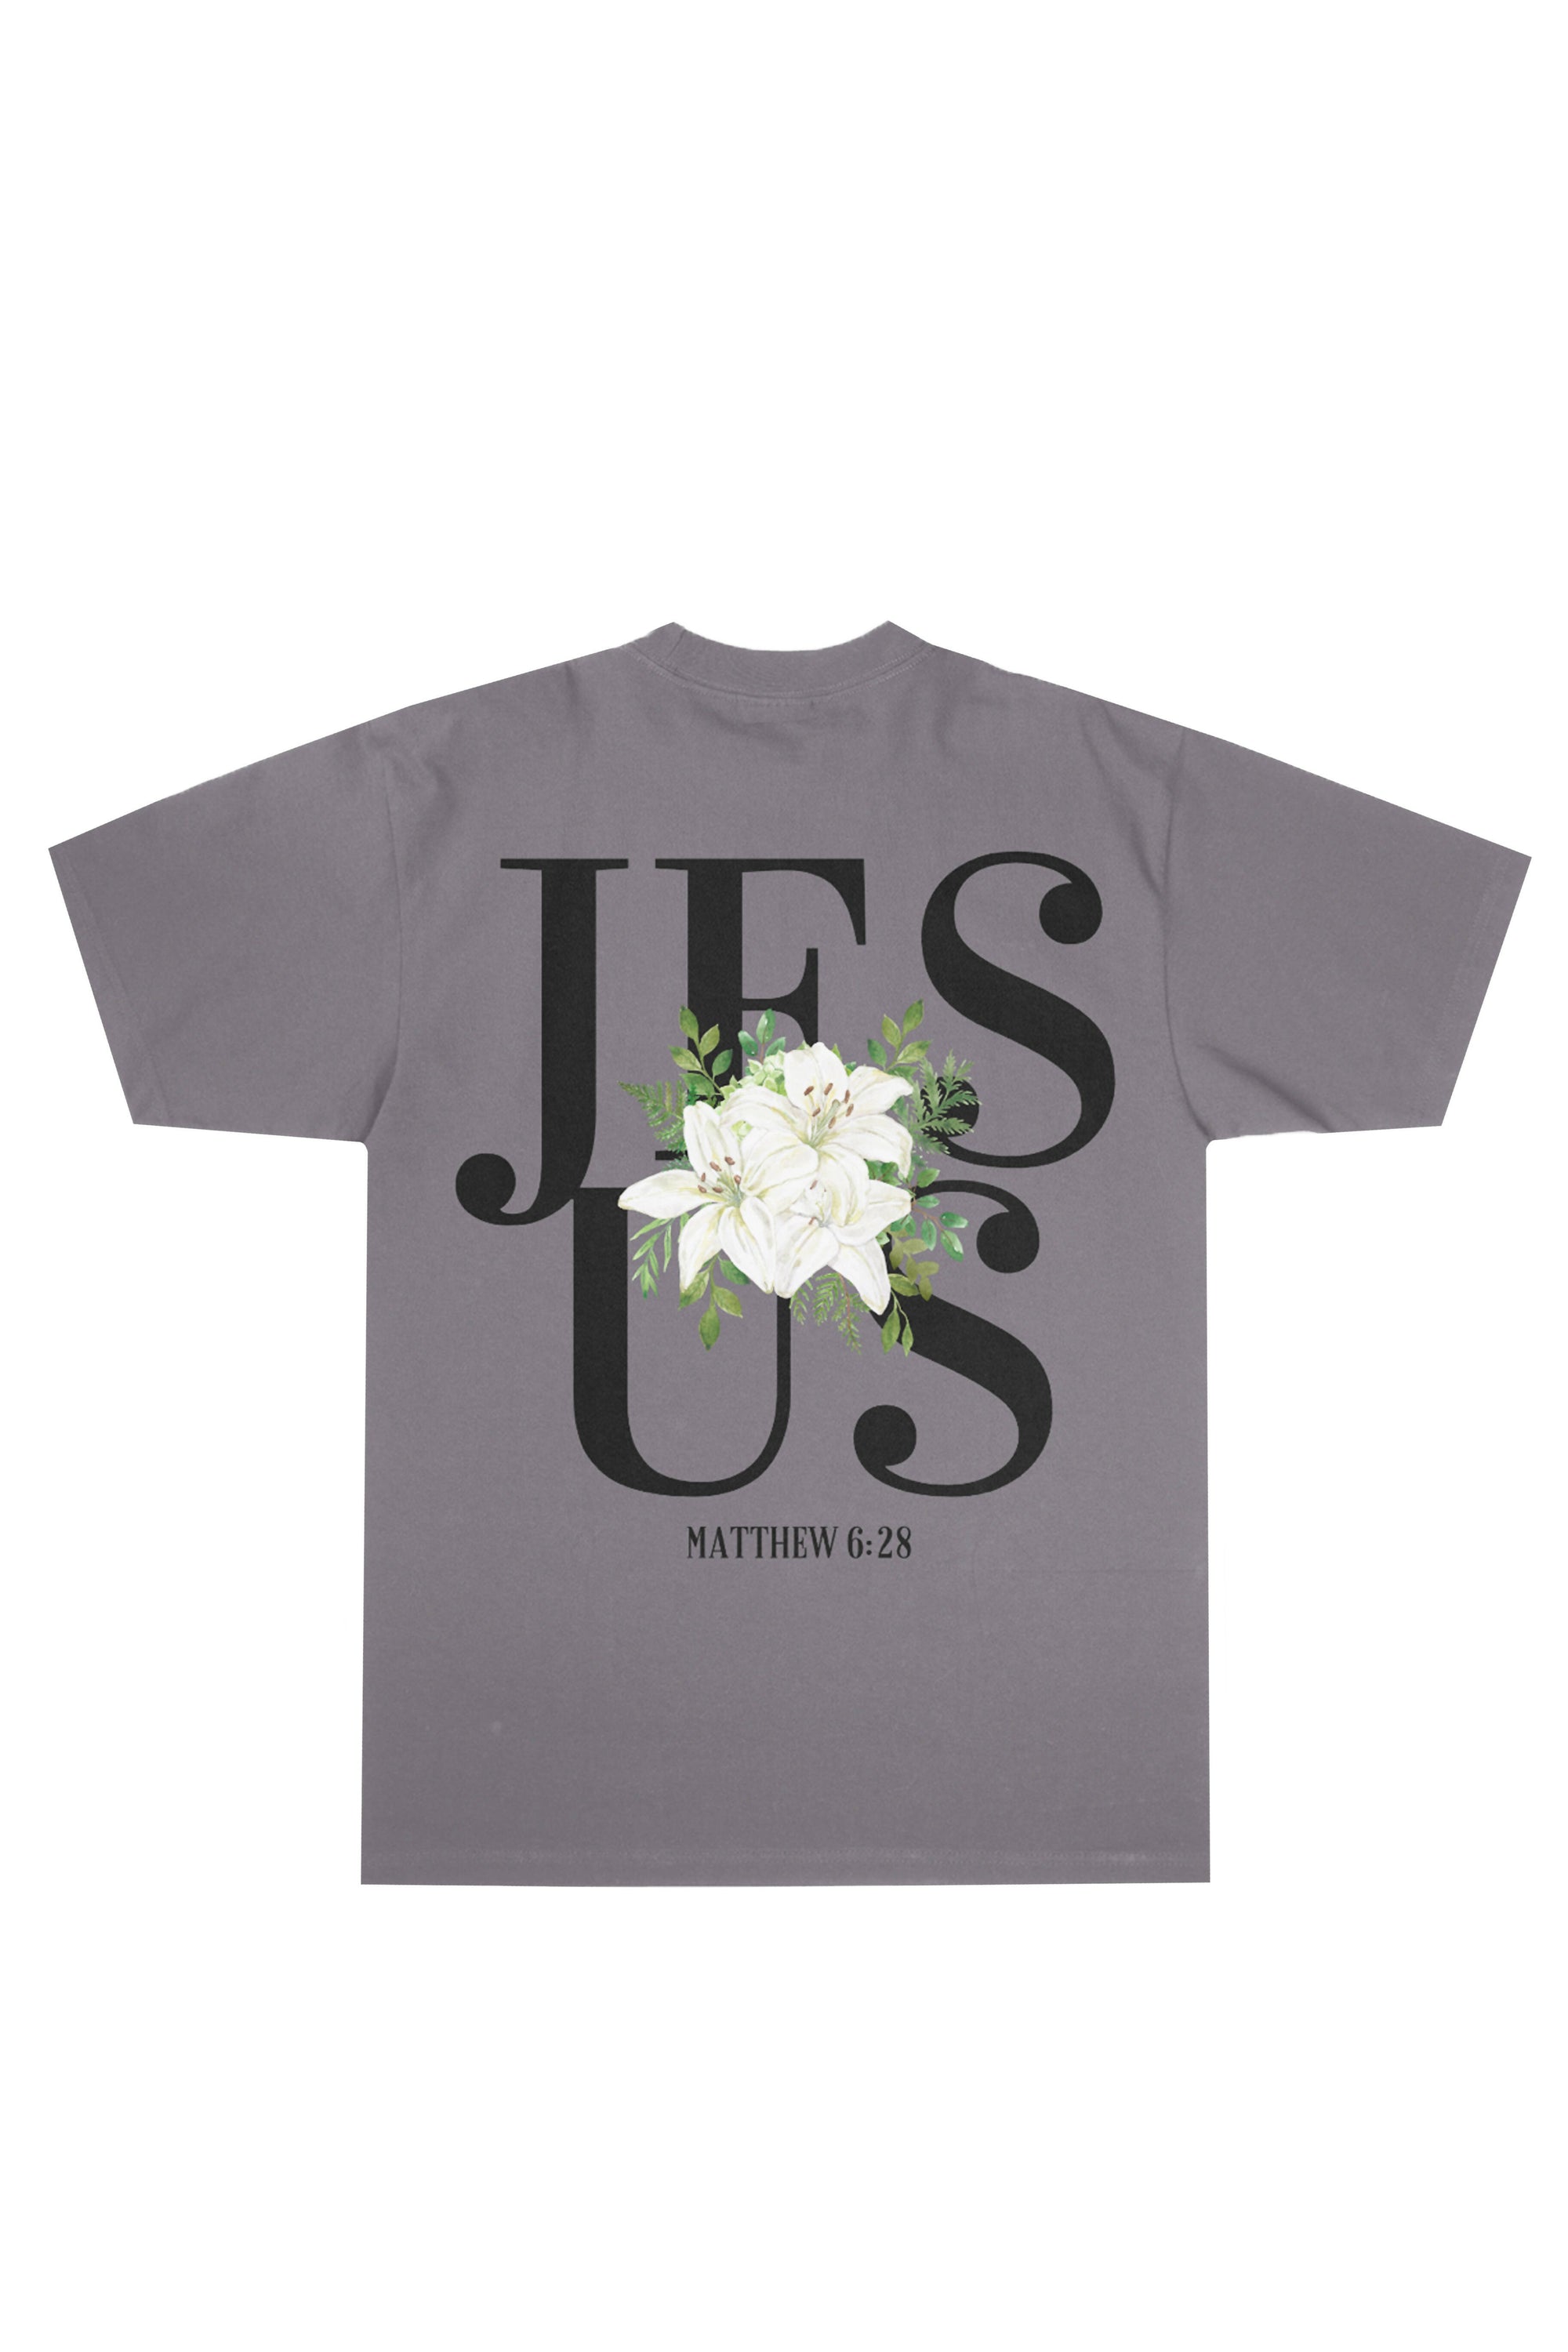 Jesus with Lillies - Grey Tee